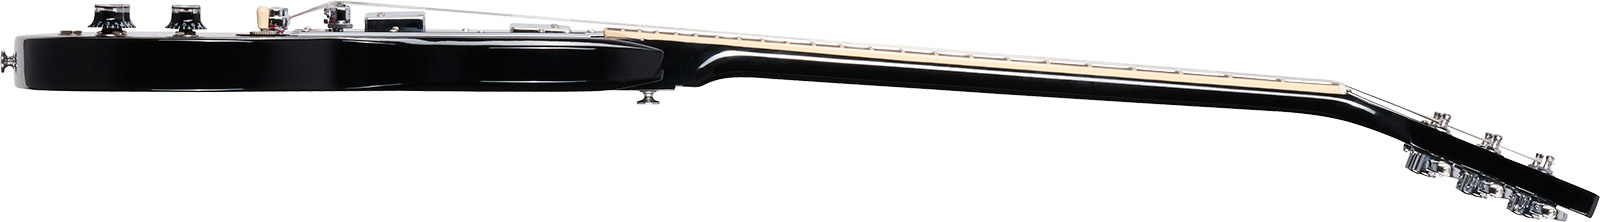 Gibson Sg Standard Custom Color 2h Ht Rw - Cardinal Red Burst - Double cut electric guitar - Variation 2